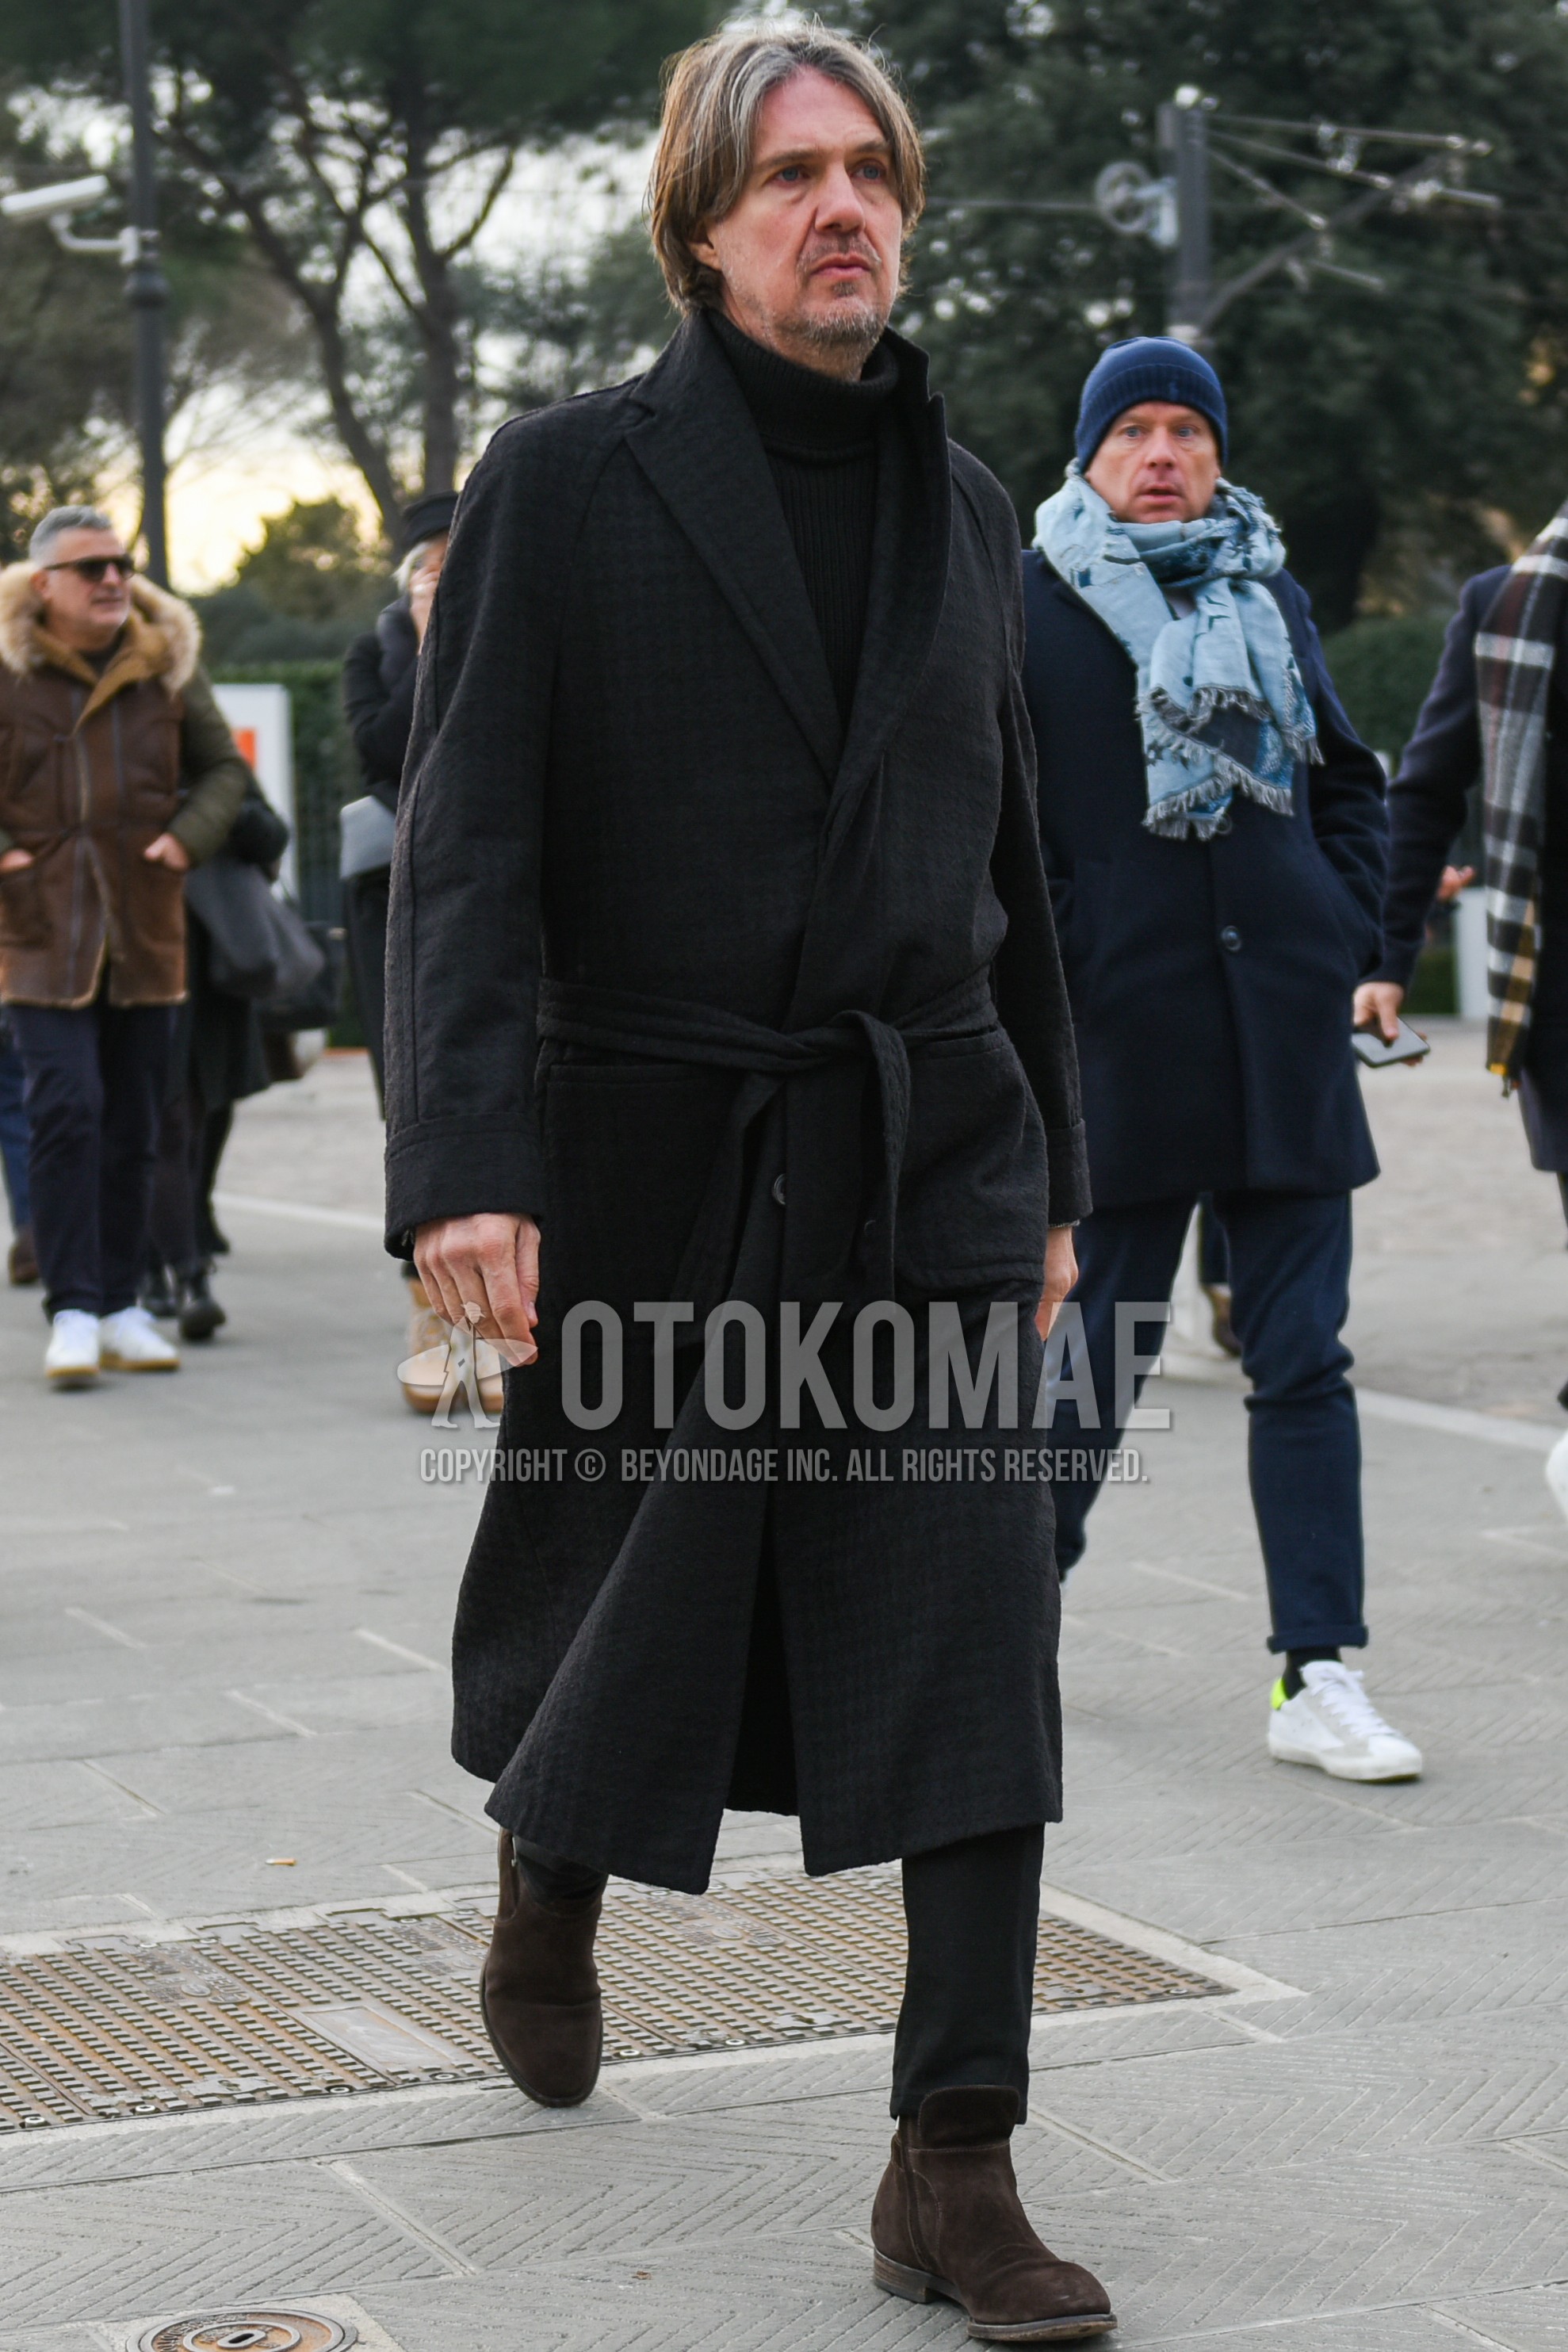 Men's autumn winter outfit with dark gray check belted coat, black plain turtleneck knit, gray plain slacks, brown side-gore boots.